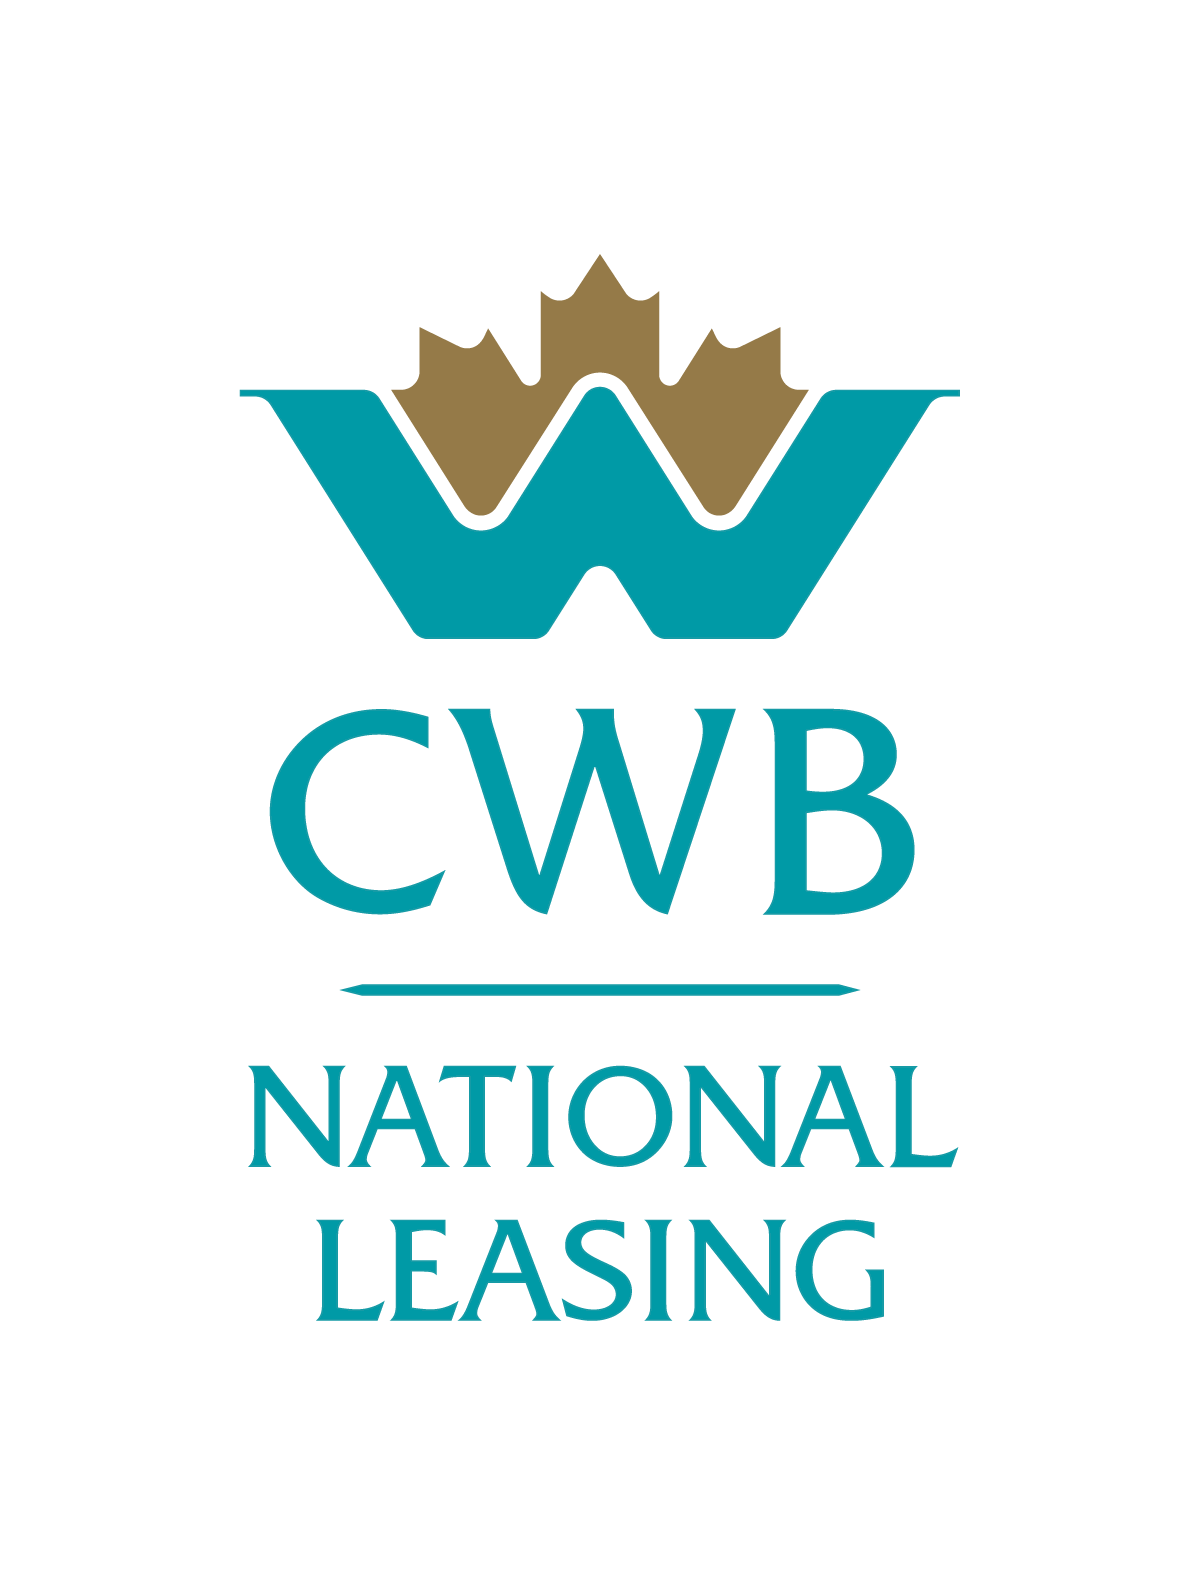 CWB National Leasing logo